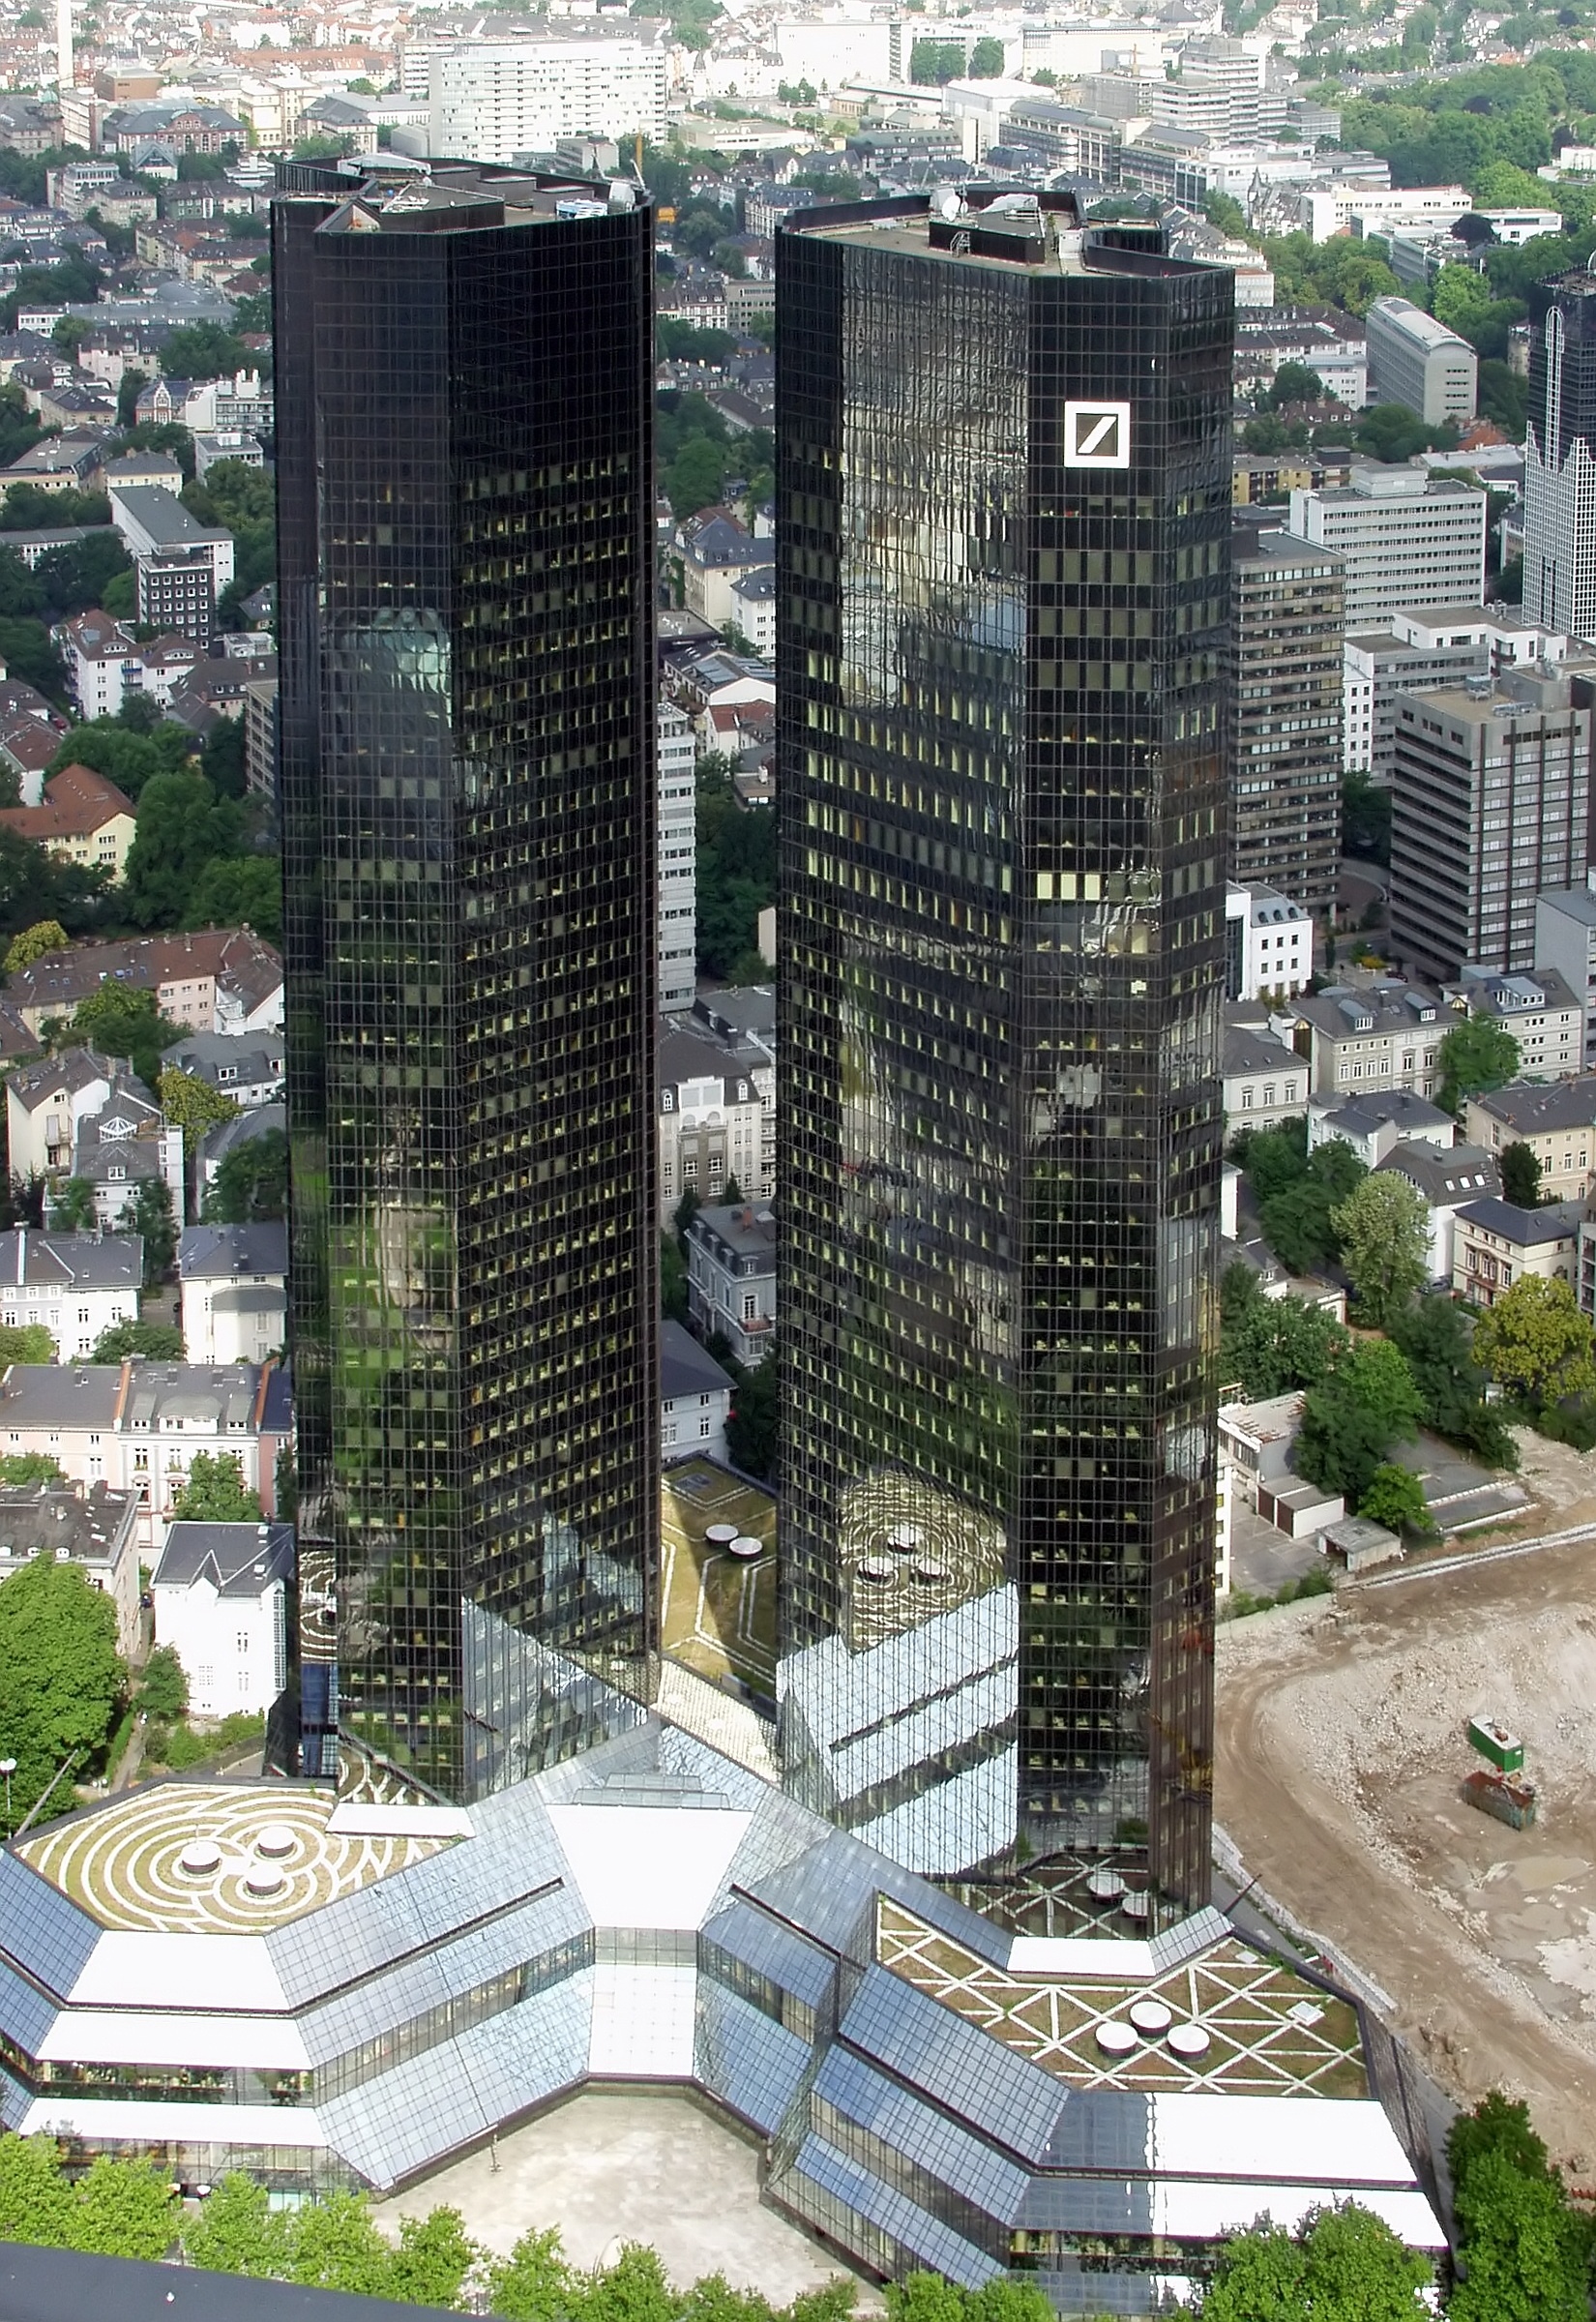 deutsche-bank-frankfurt-am-main. Фото: Wikimedia.org